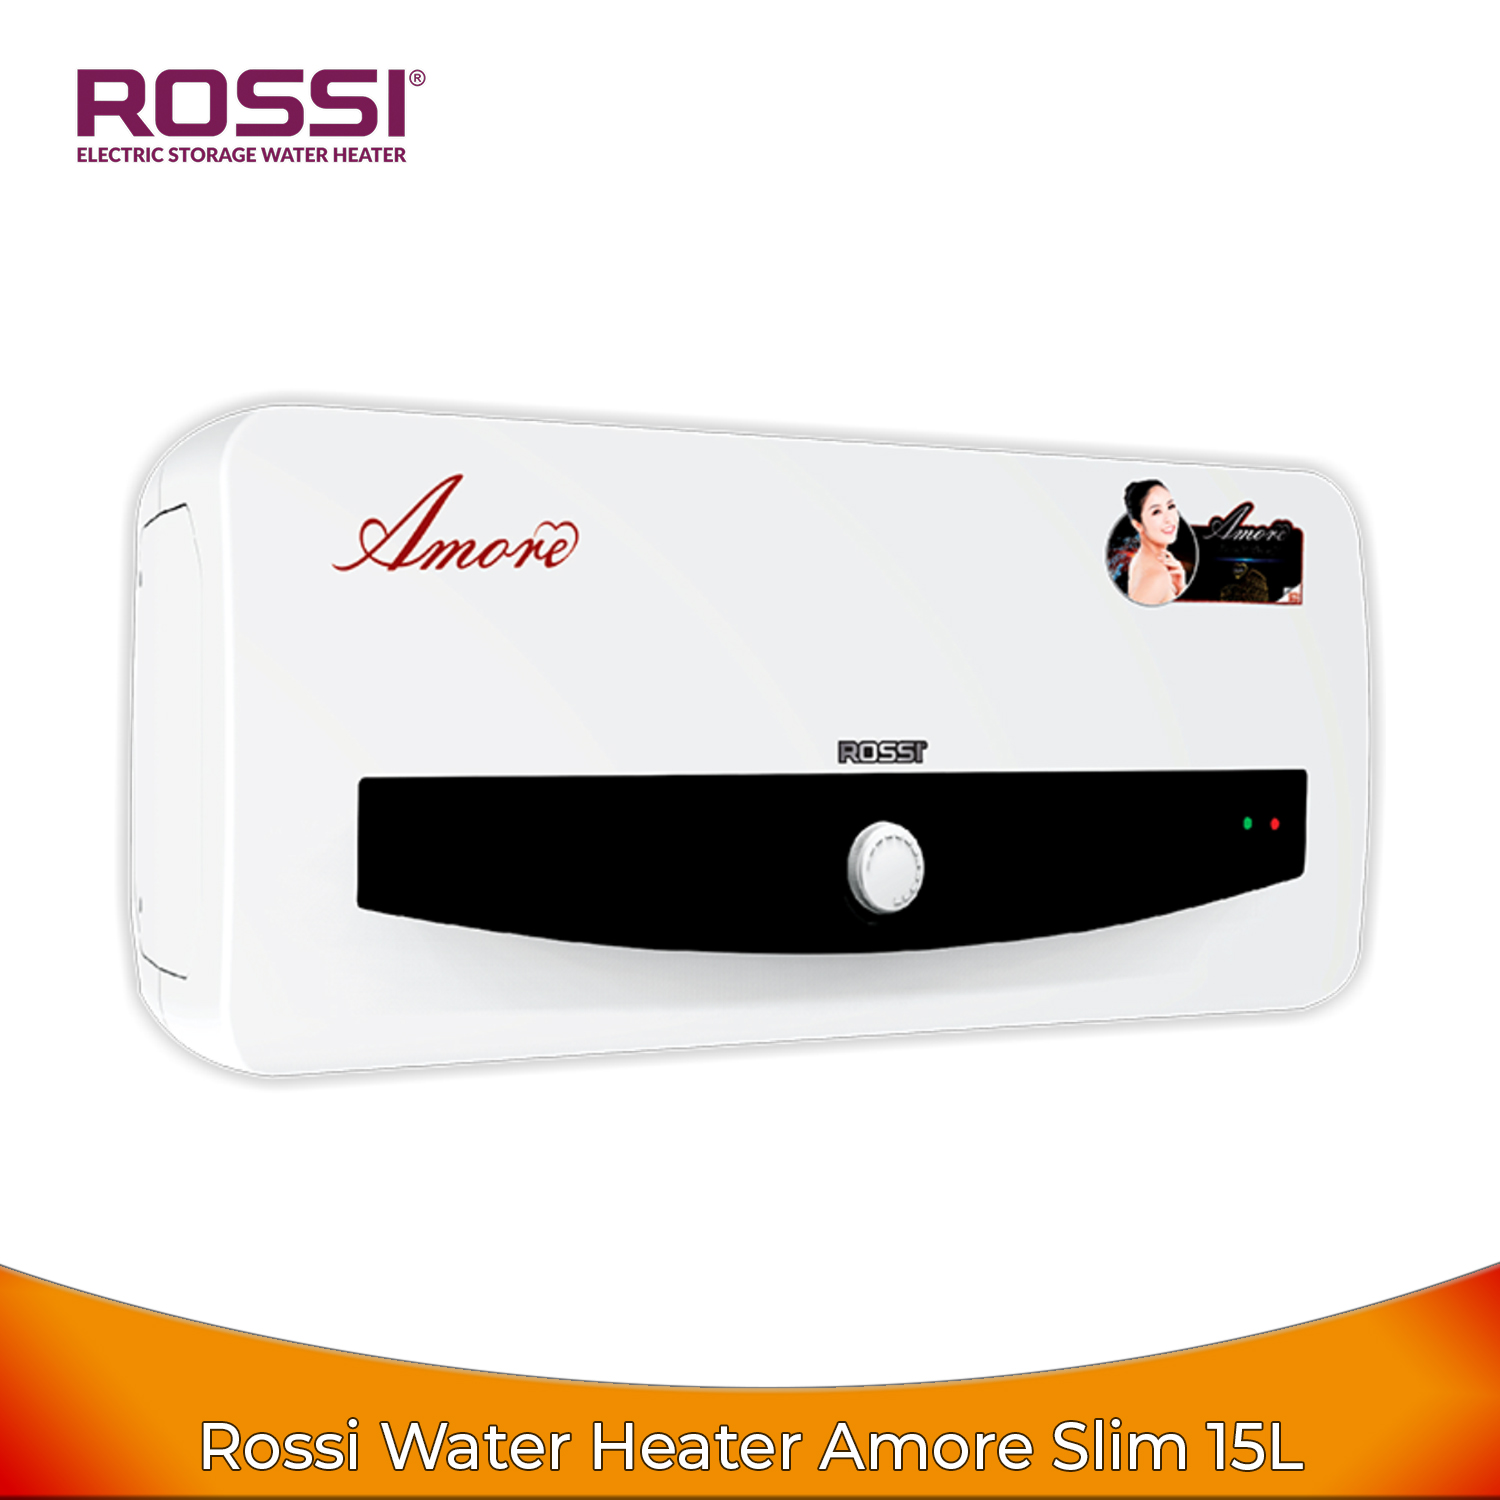 Rossi Water Heater Elektrik Amore Slim 15L - Pemanas Air